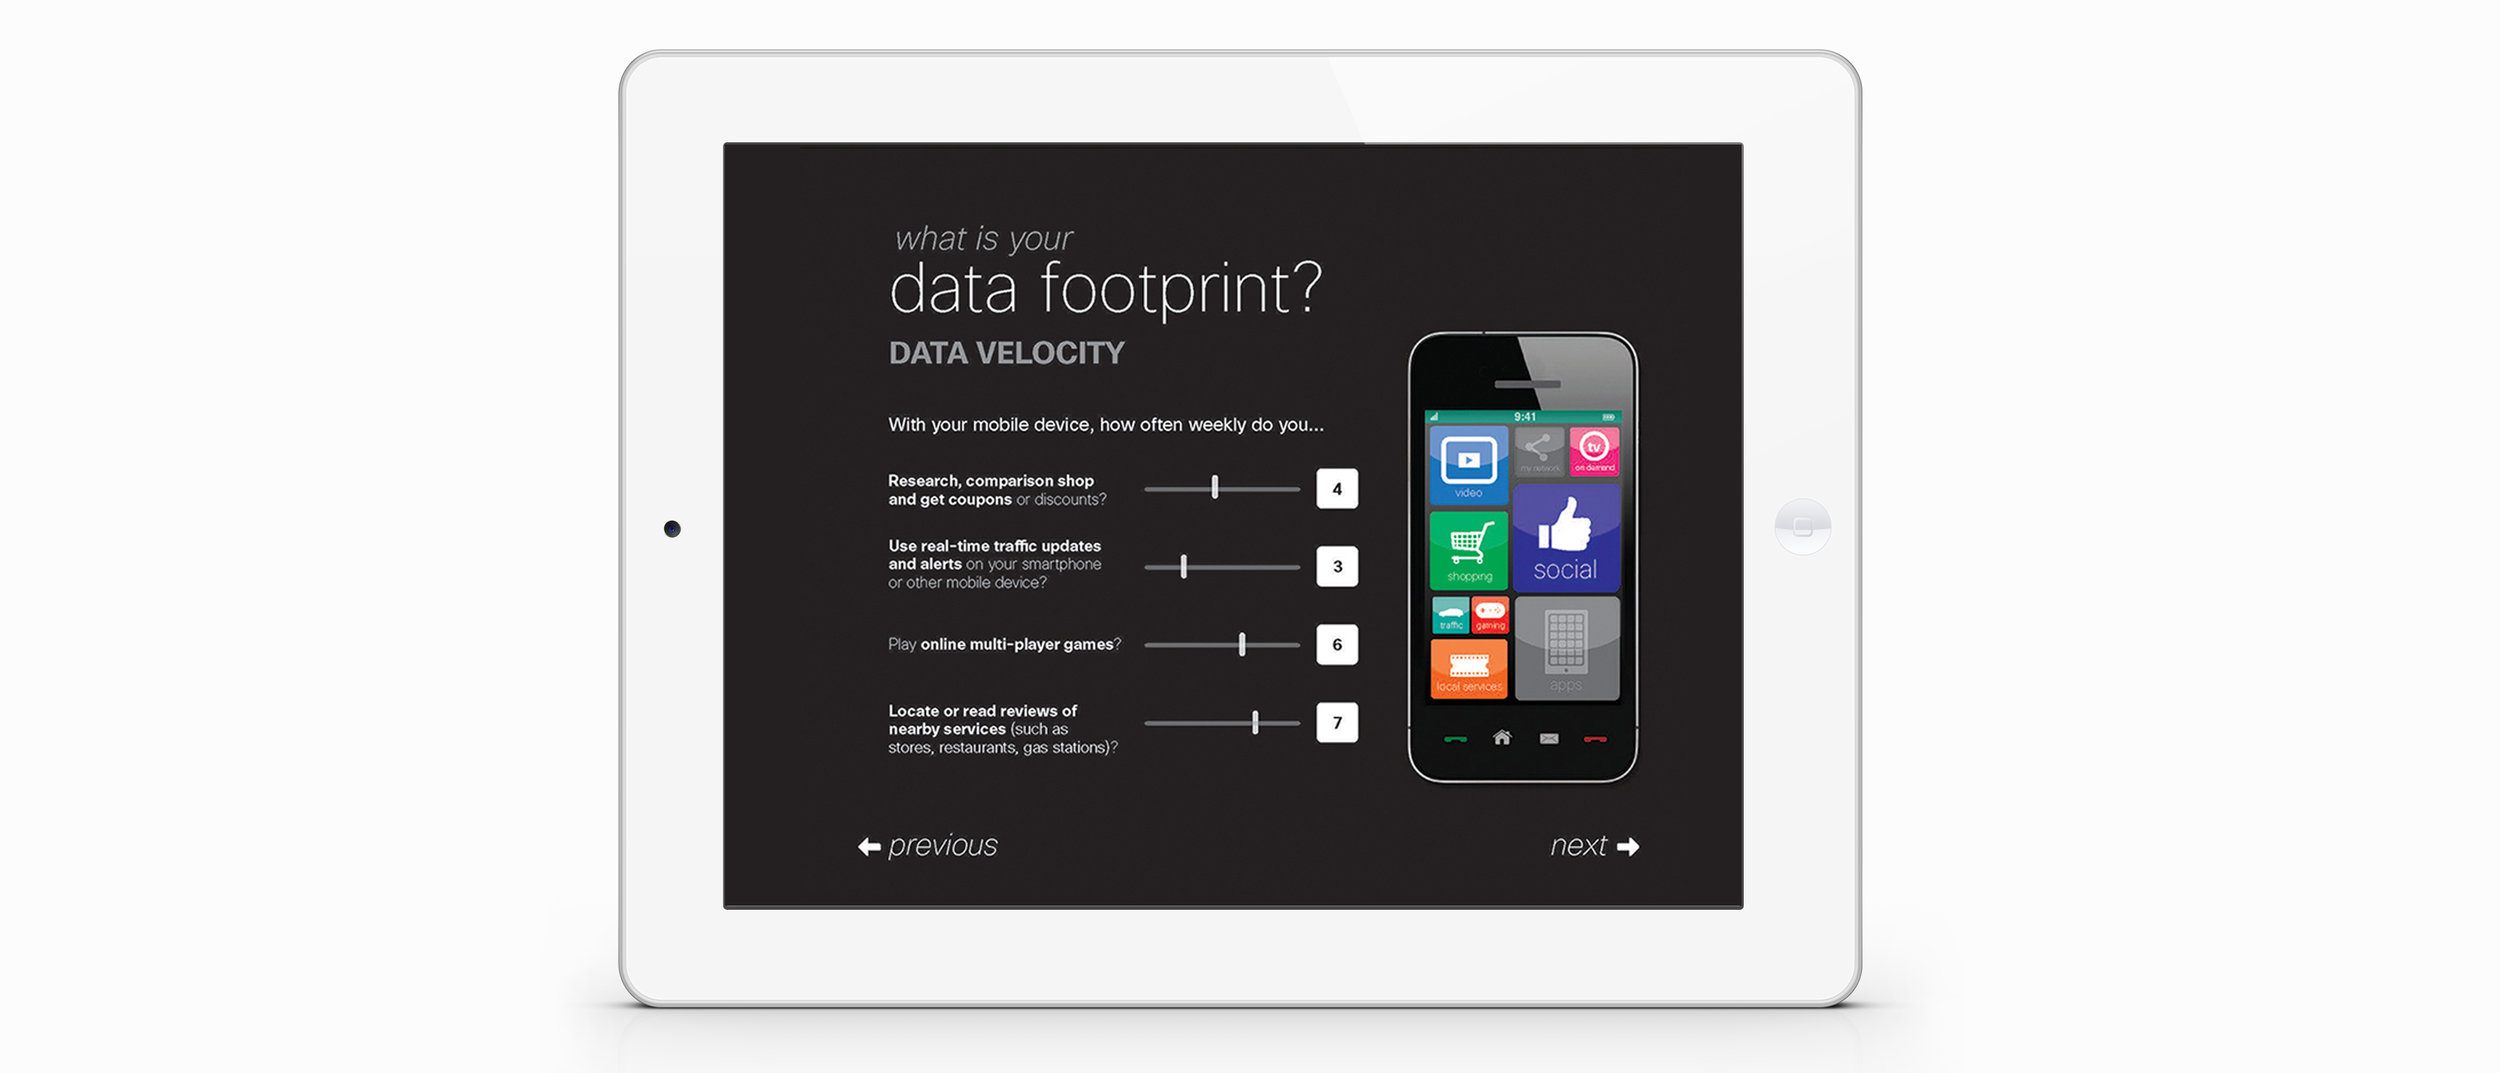 Footprint_iPad_4 copy.jpg